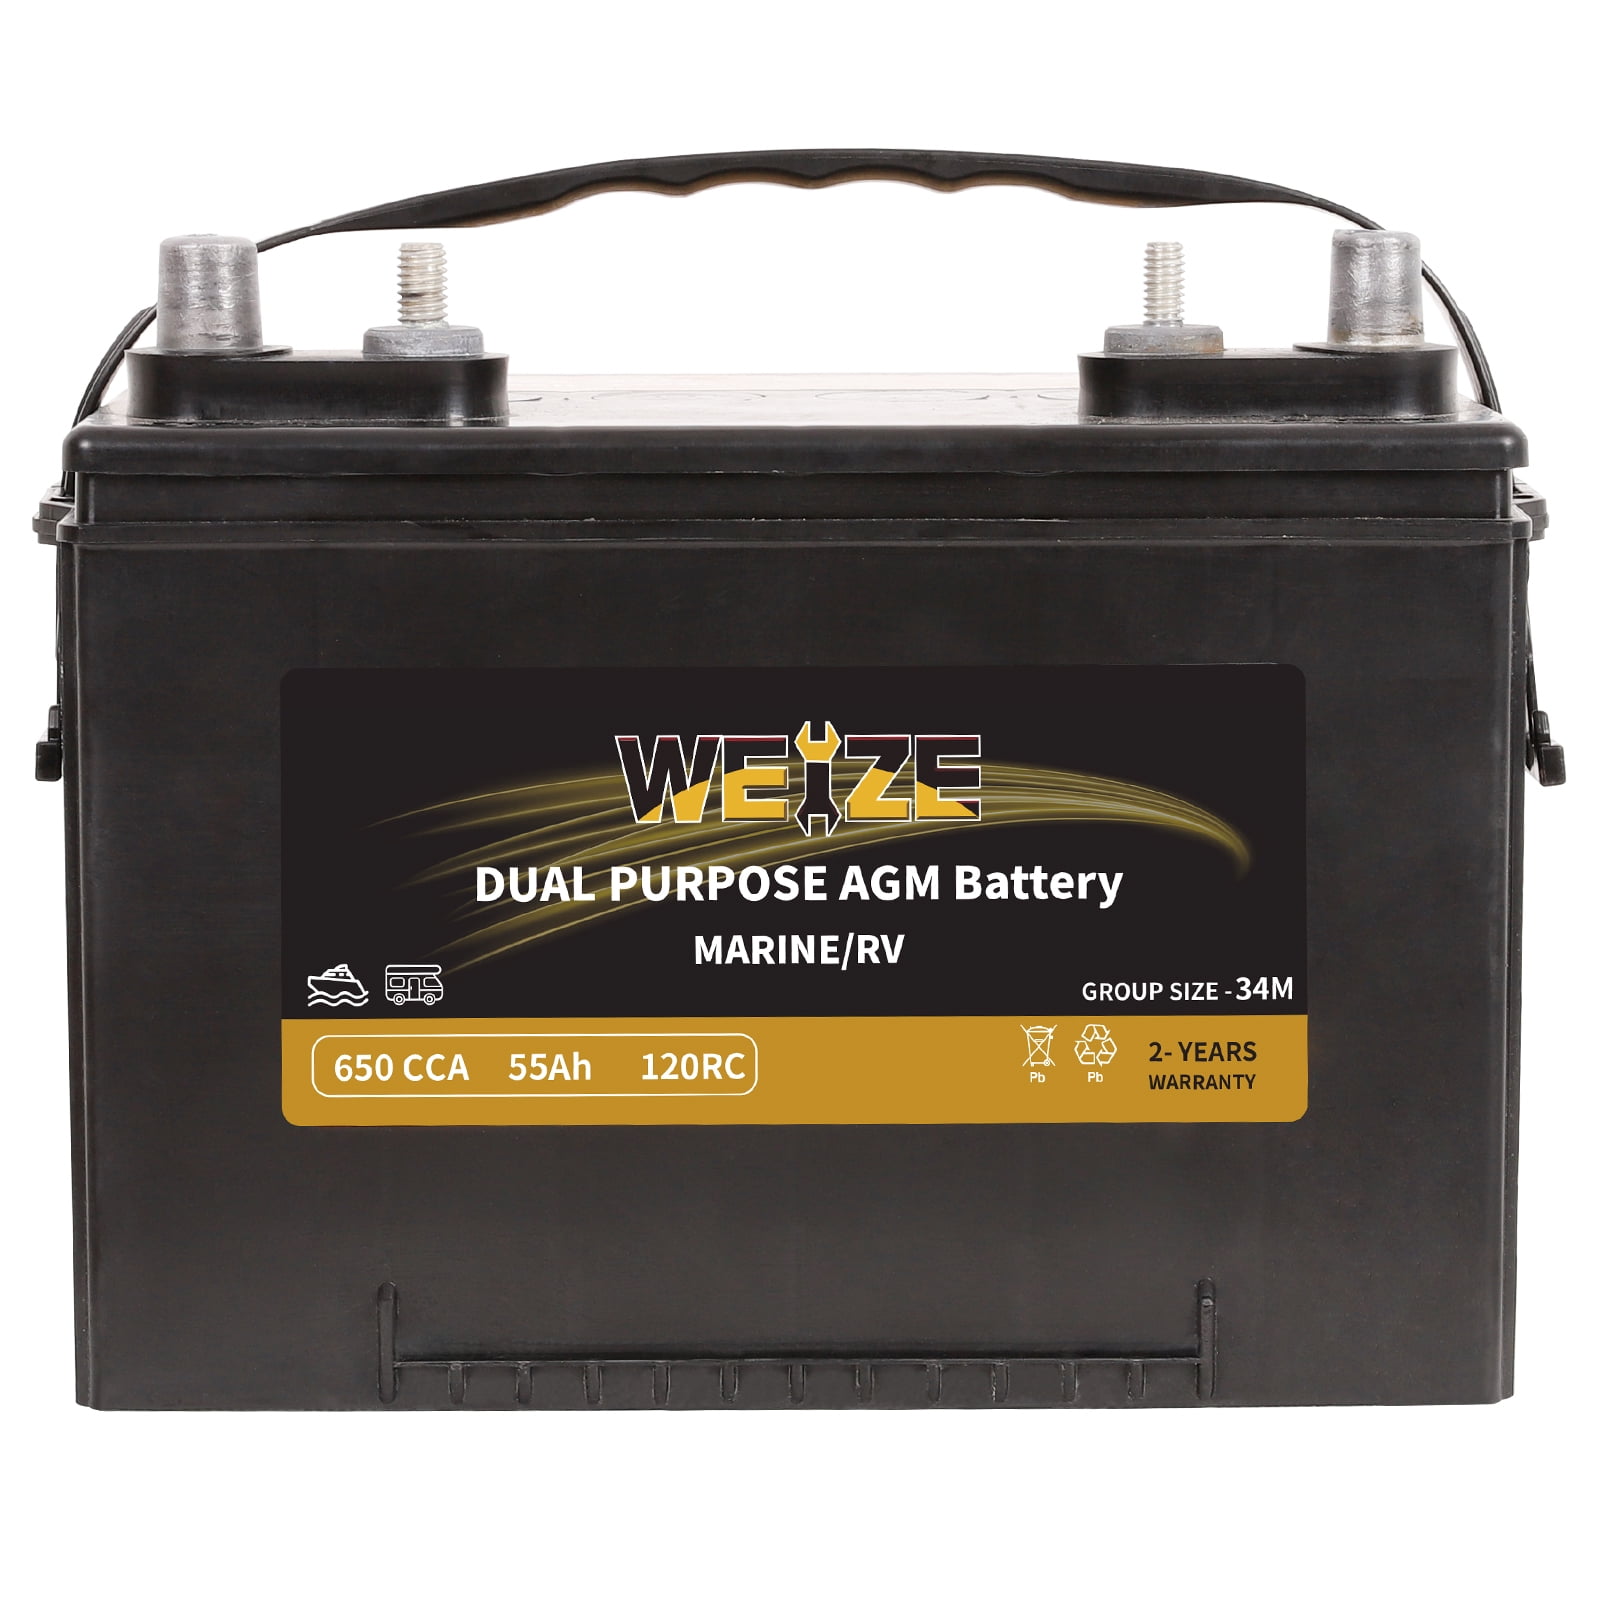 EverStart Maxx Lead Acid Automotive Battery, Group Size 124R 12 Volt, 700  CCA